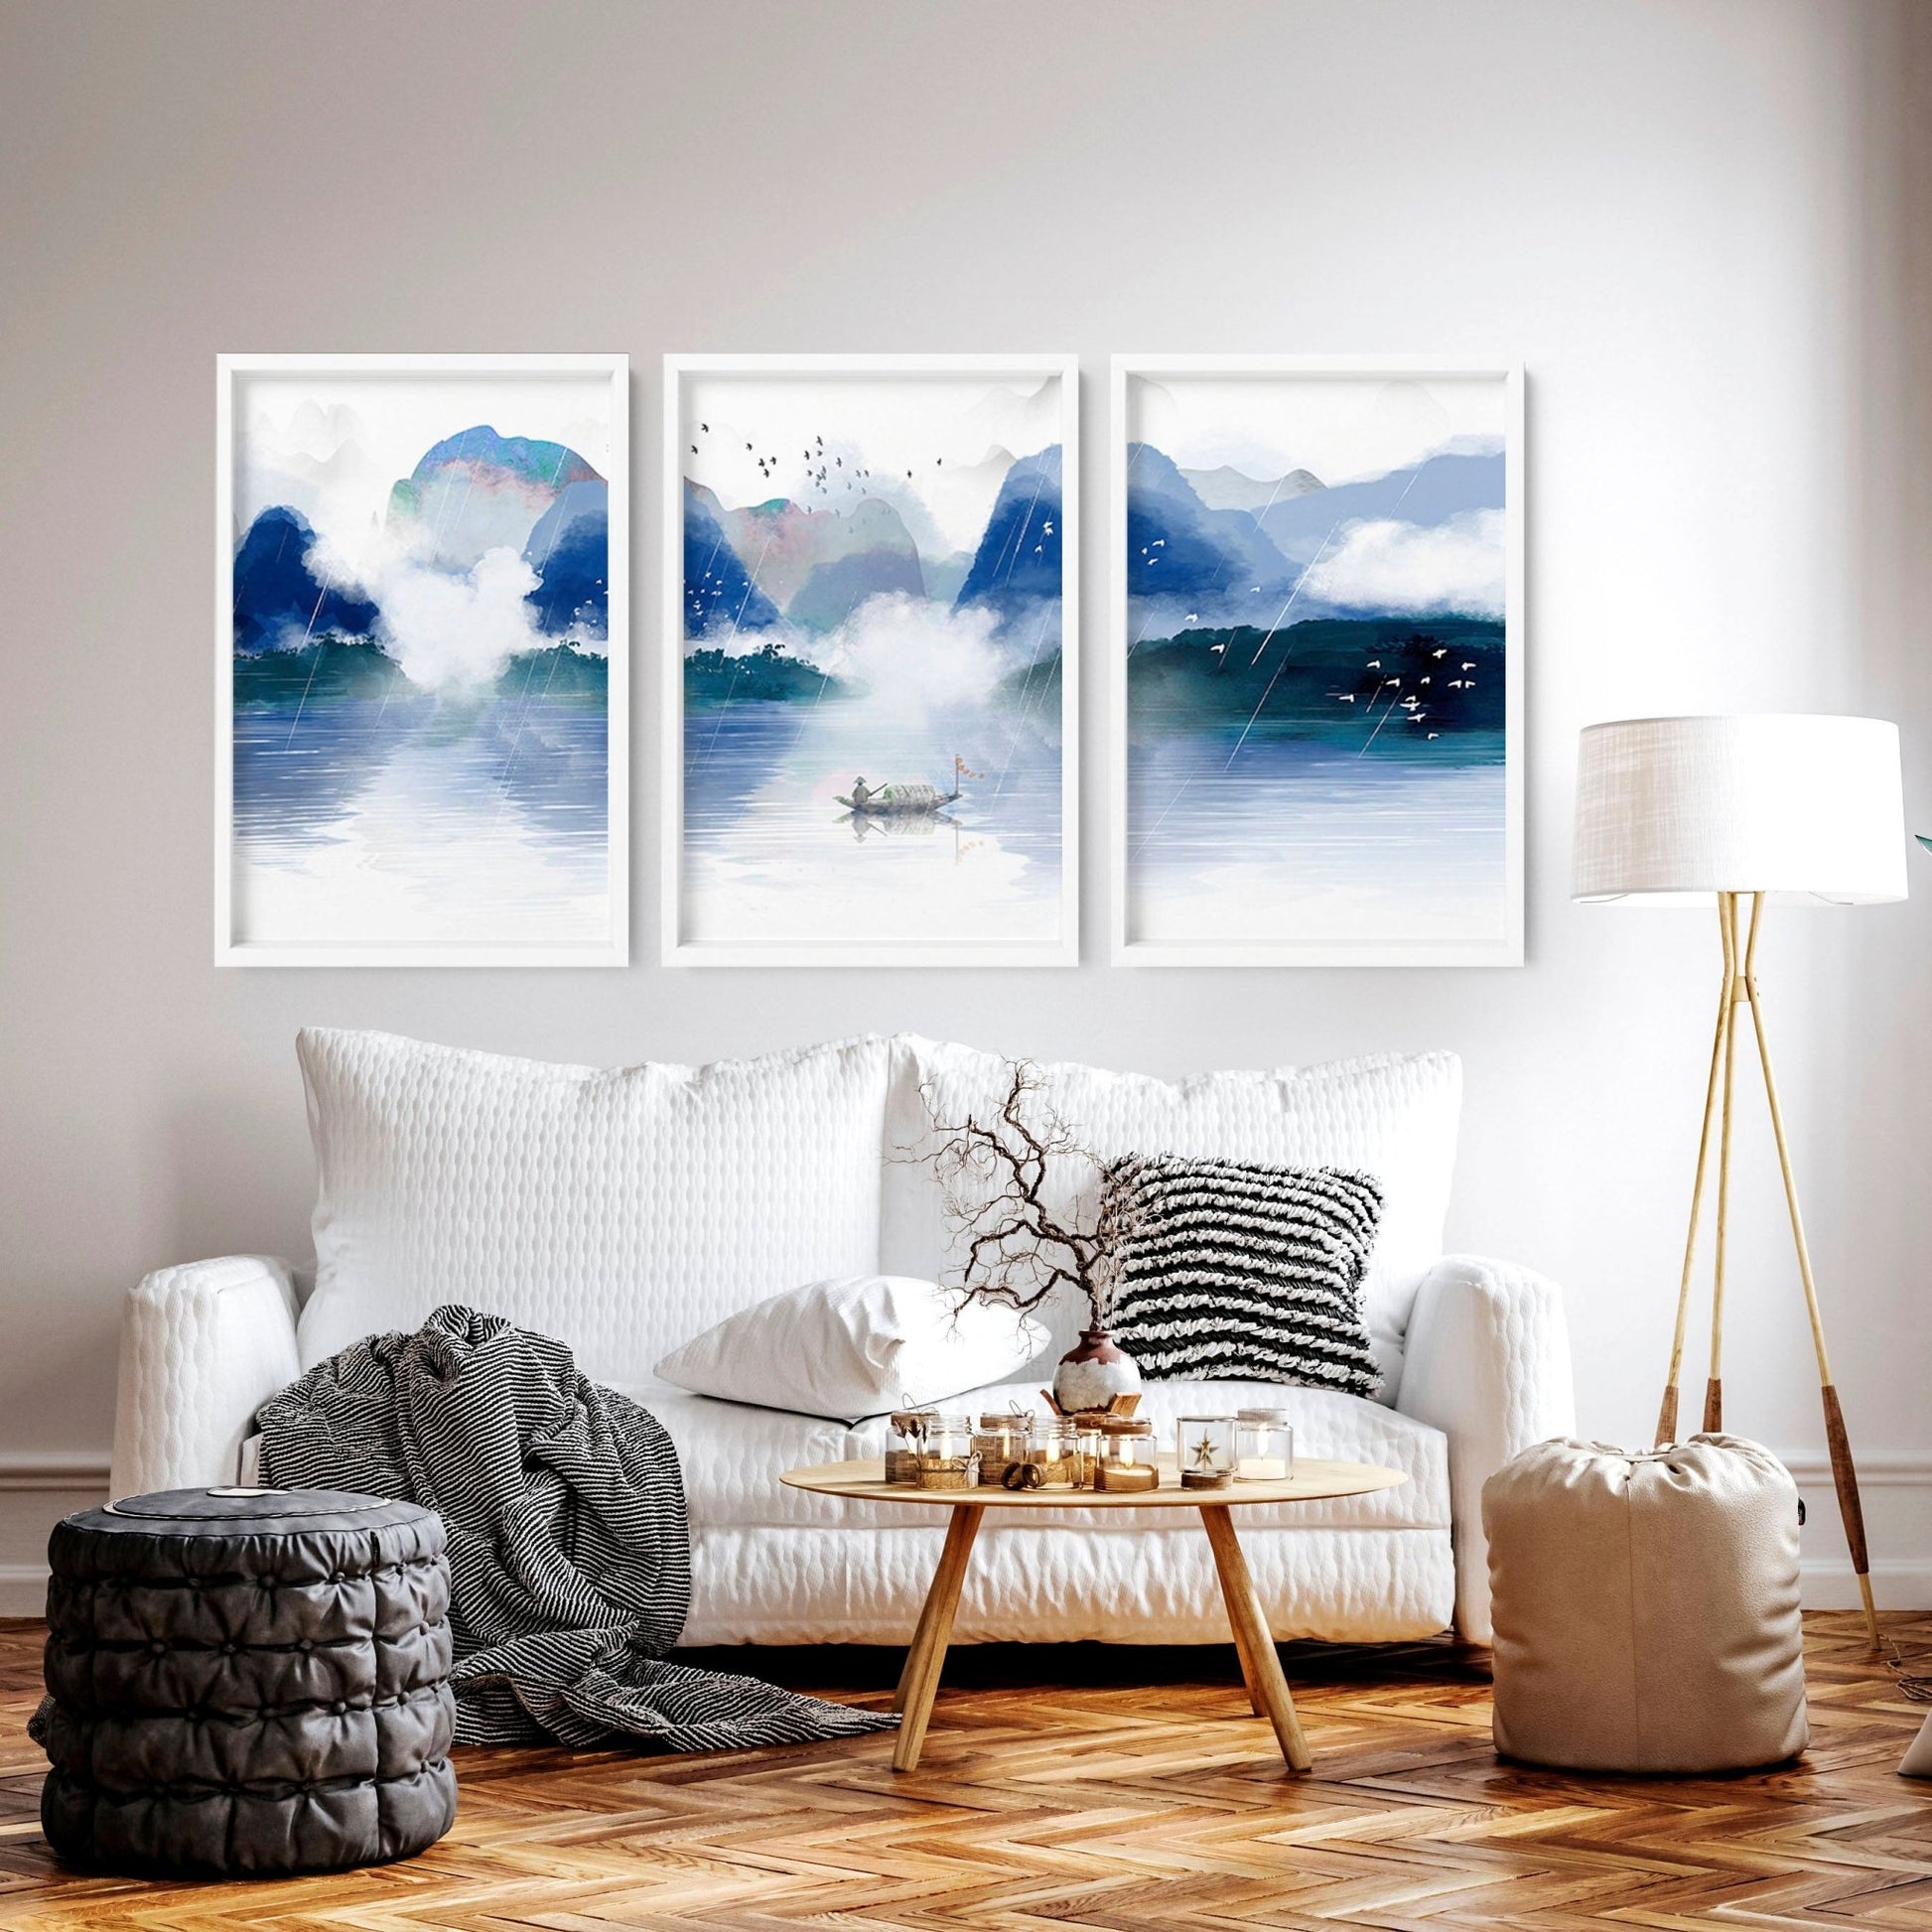 Japanese Zen decor for home | set of 3 wall art prints - About Wall Art